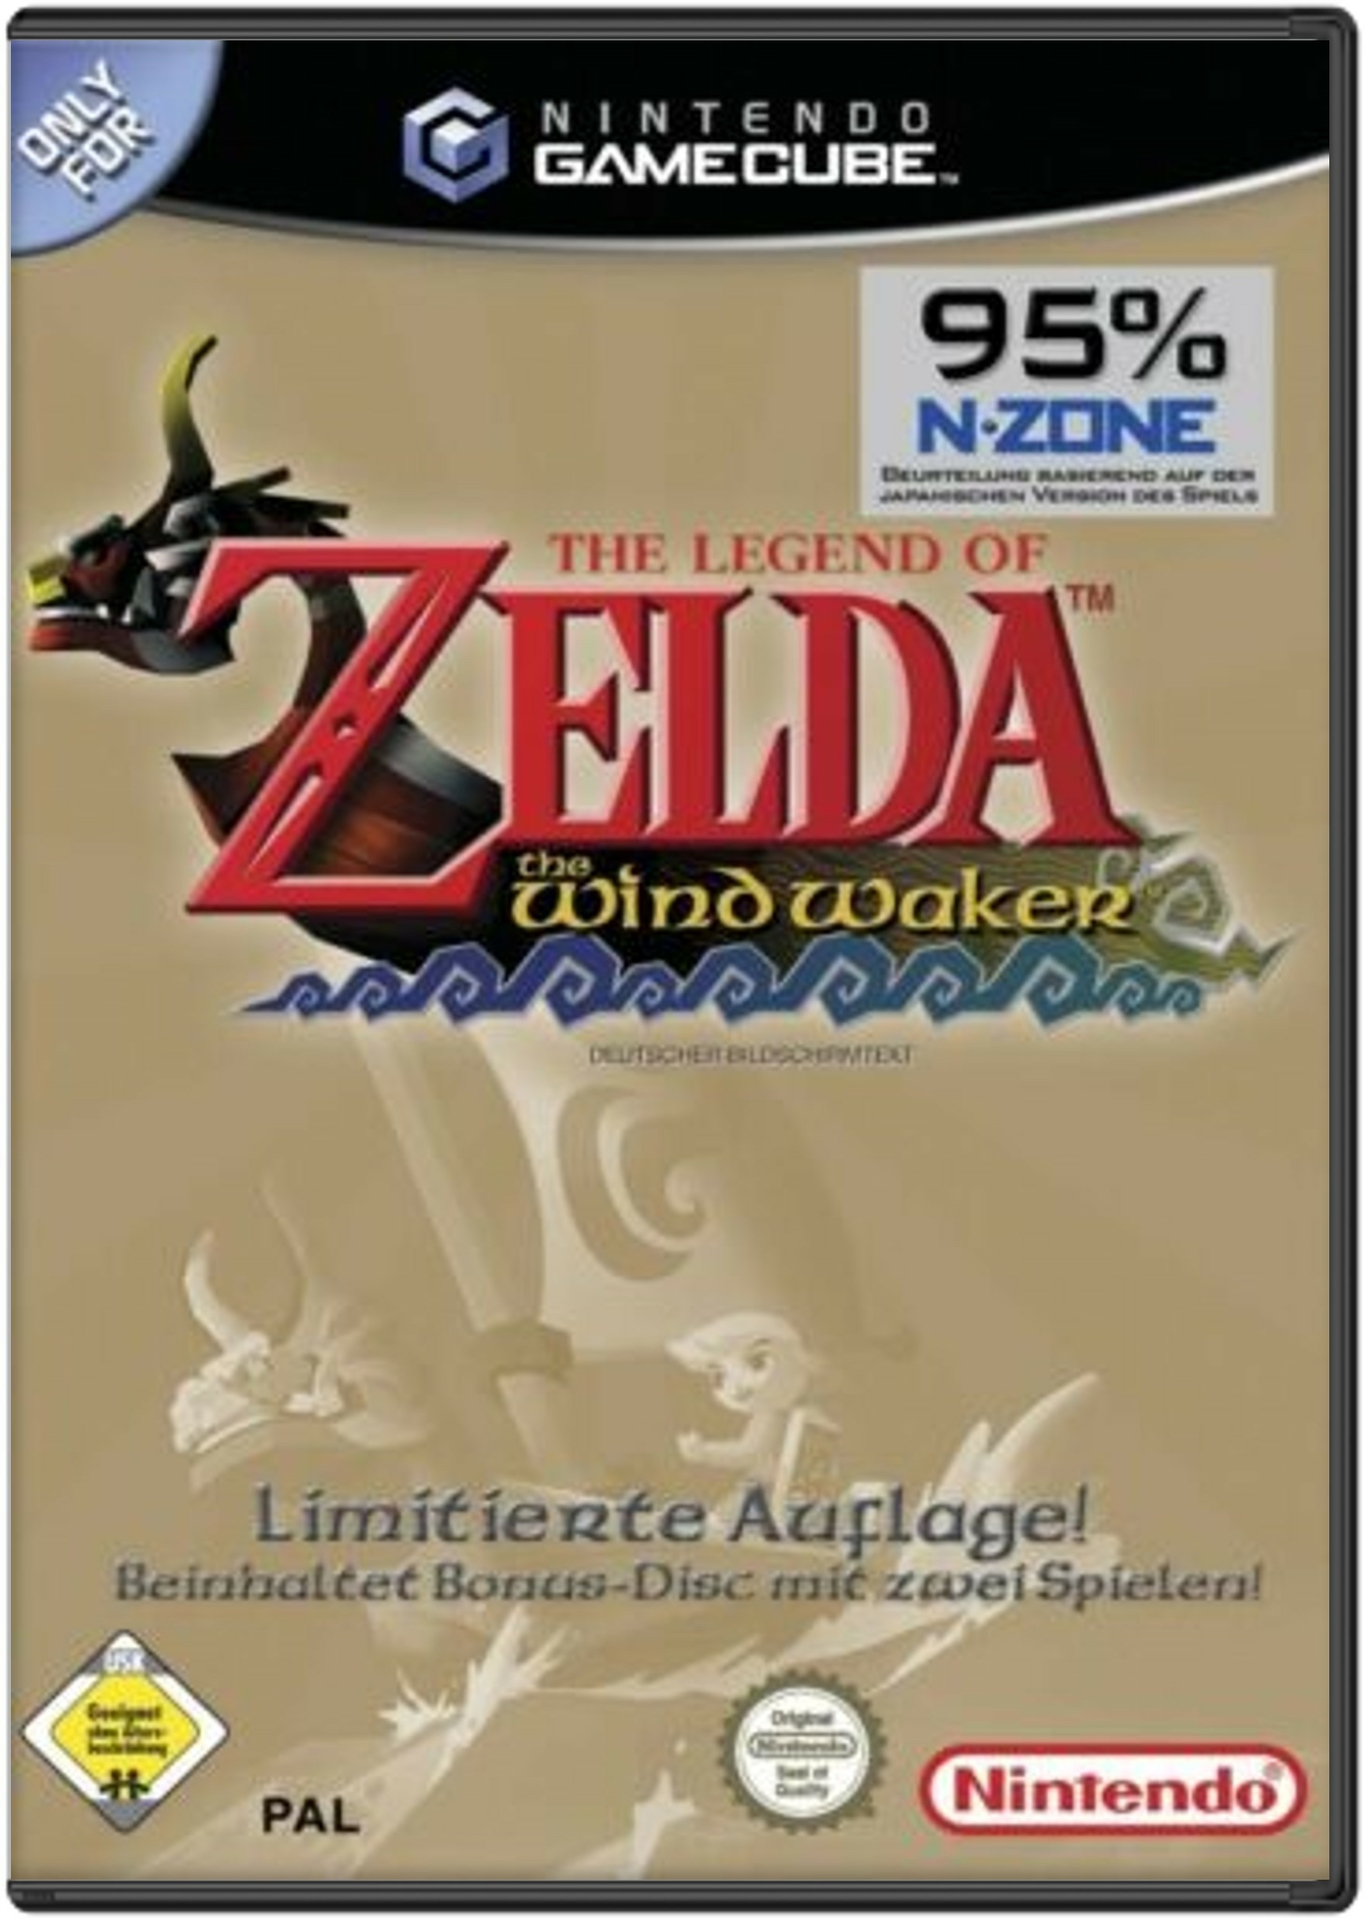 The Legend of Zelda The Windwaker - Limited Edition (German) - Gamecube Games